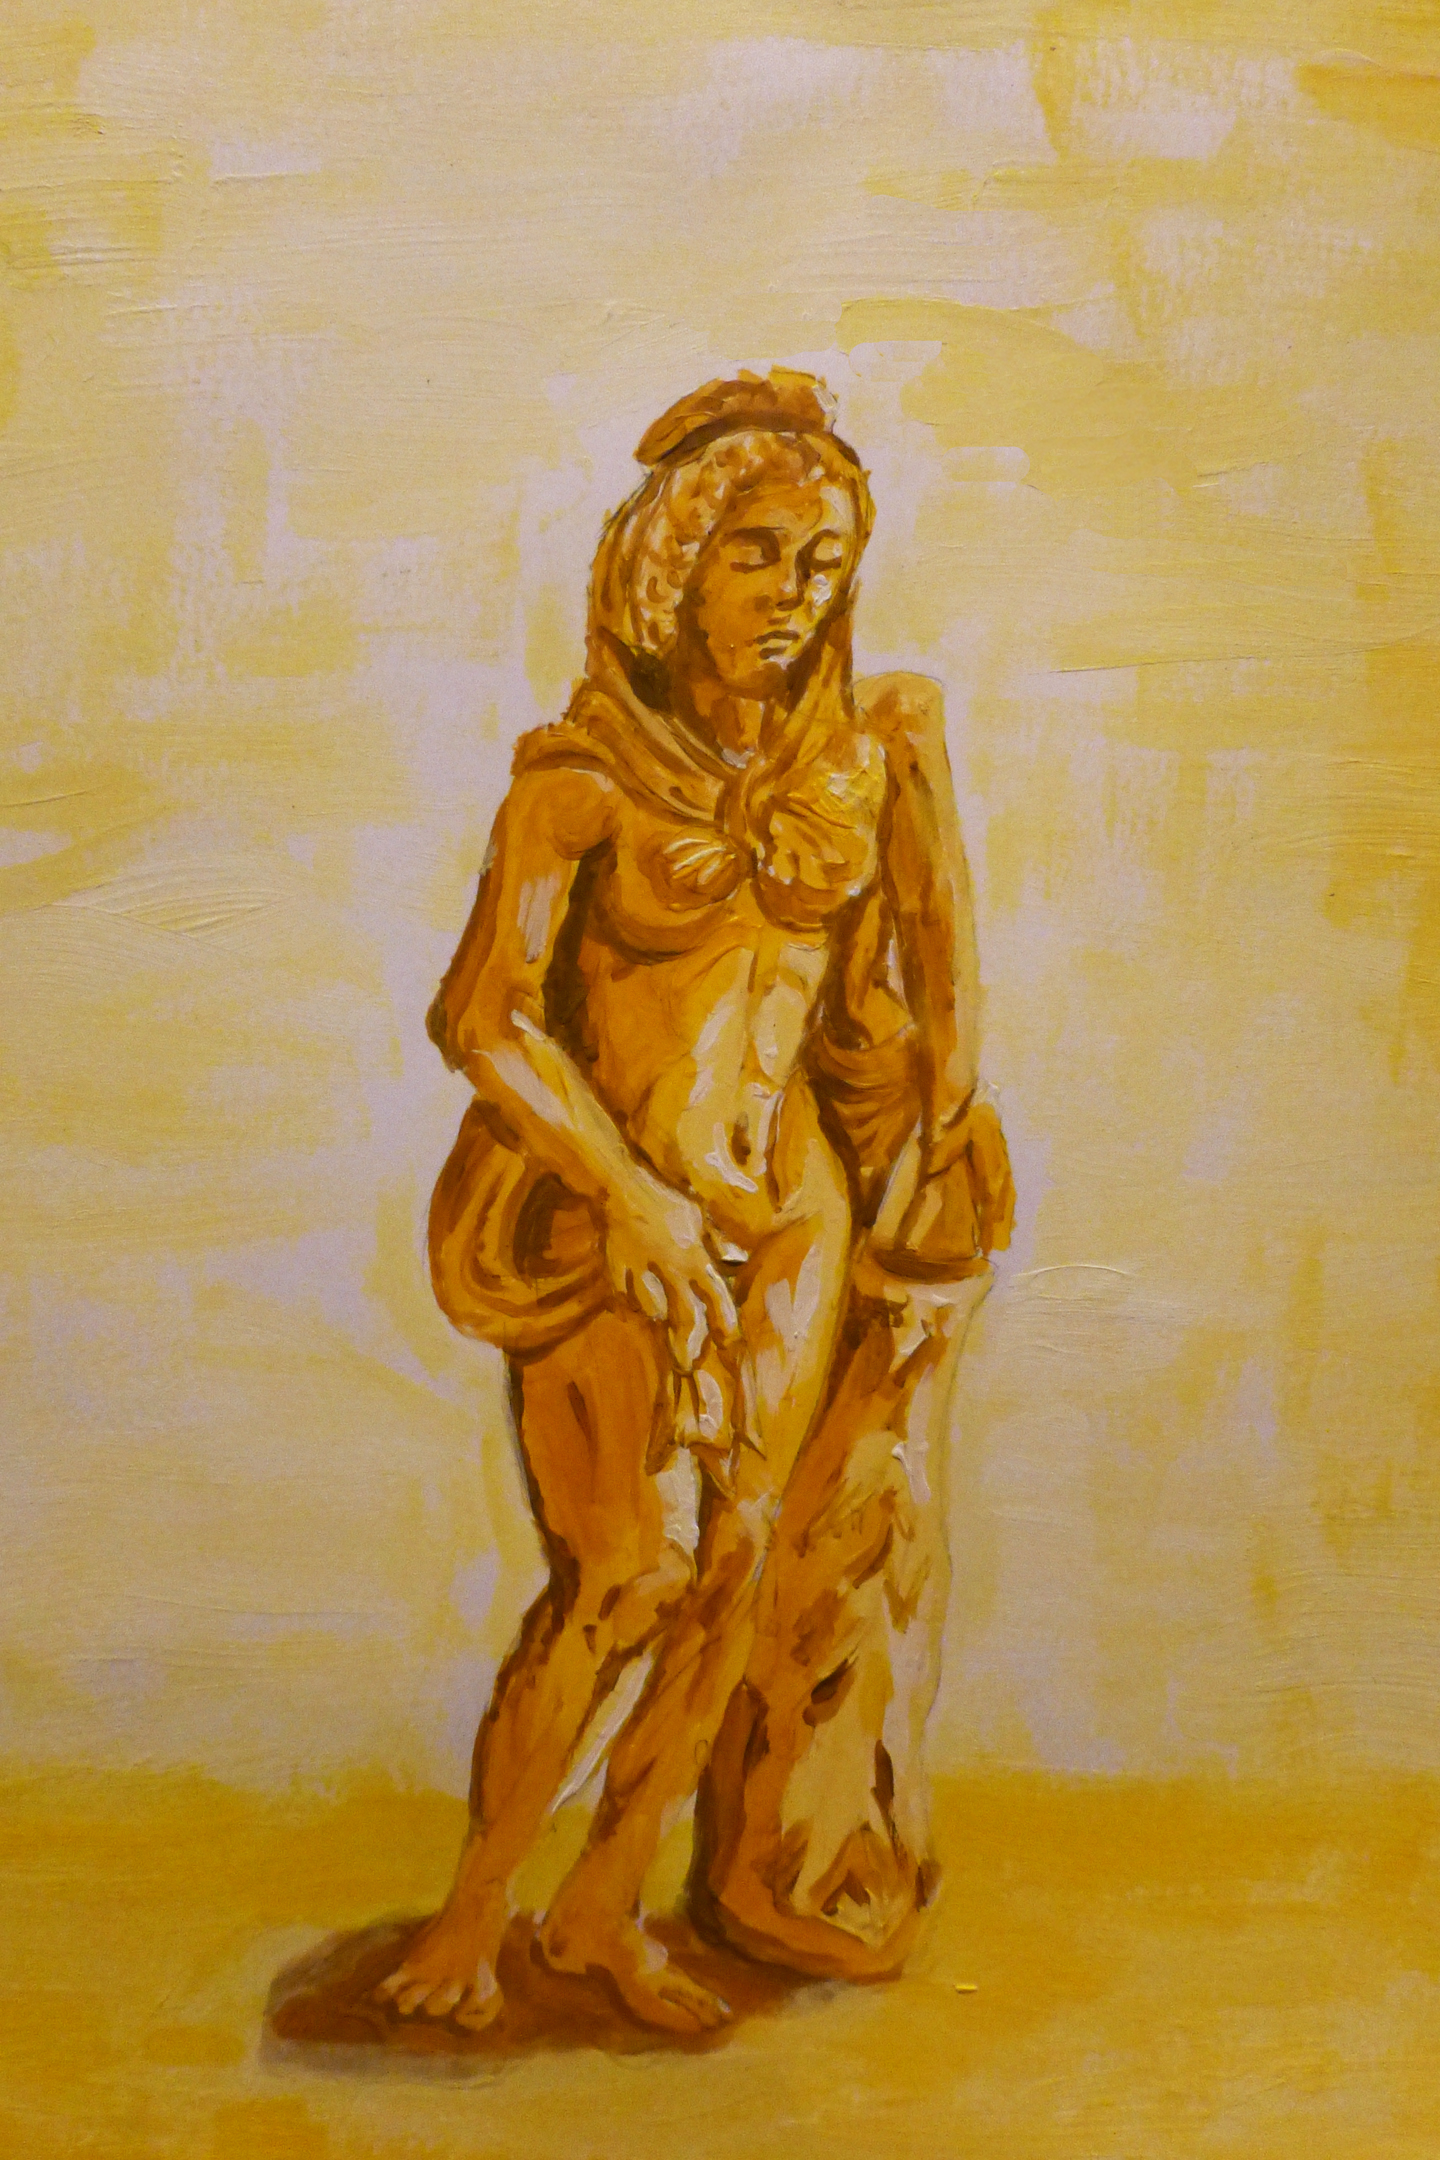 Painting of Venus Sculpture